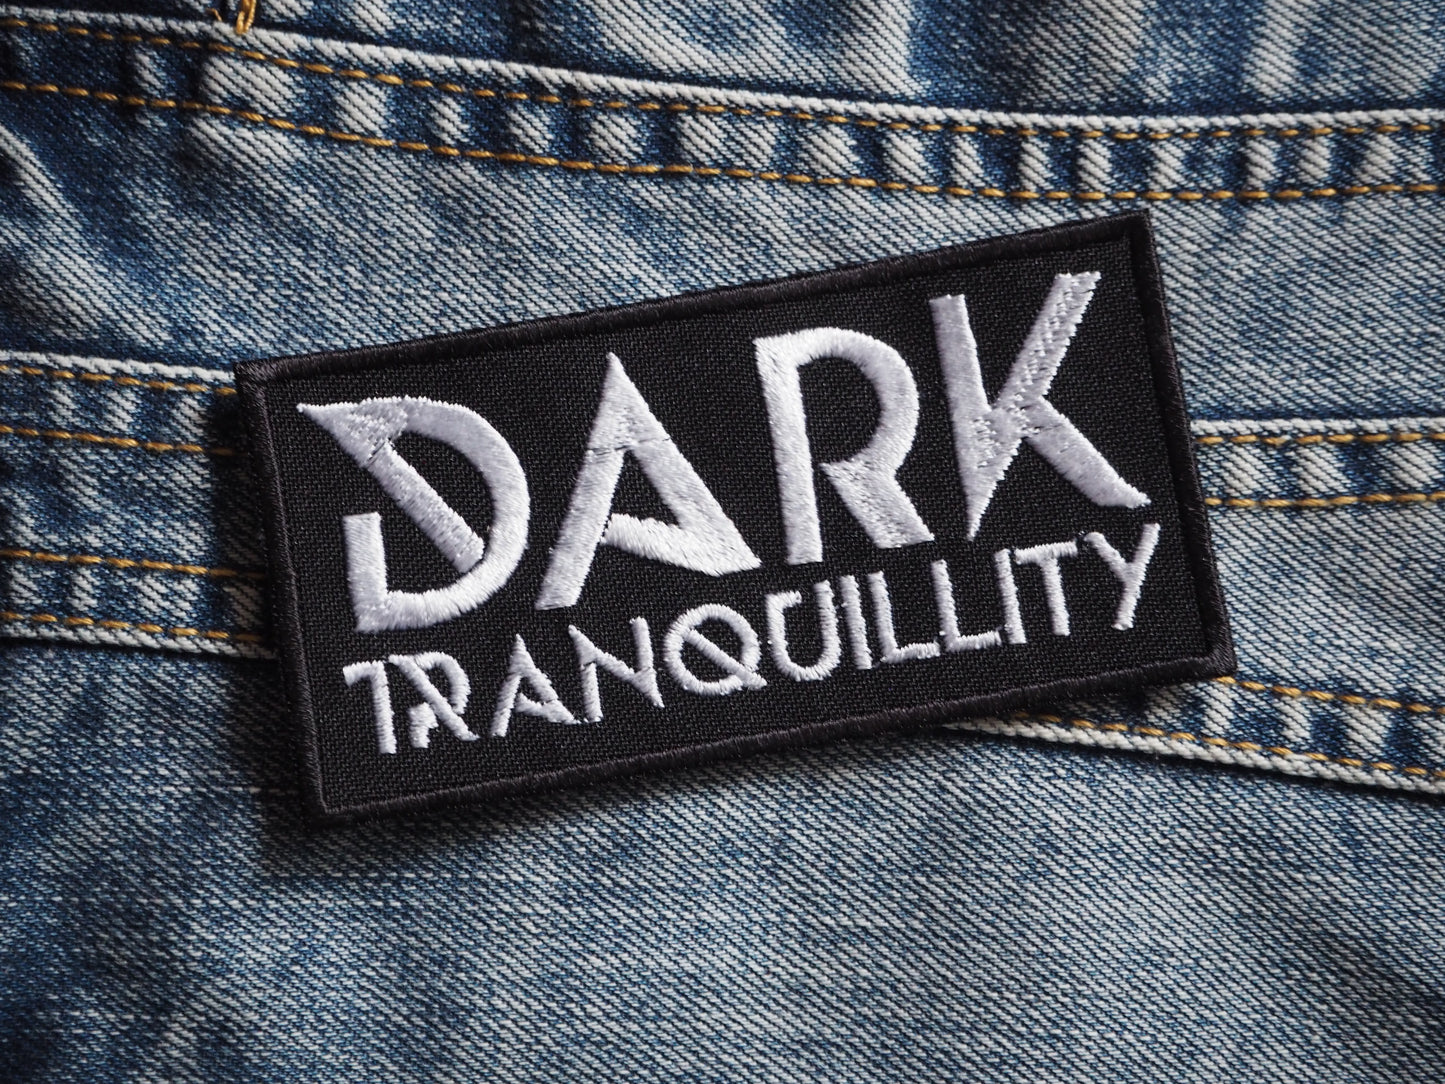 Dark Tranquillity Black Death Metal Embroidered Patch